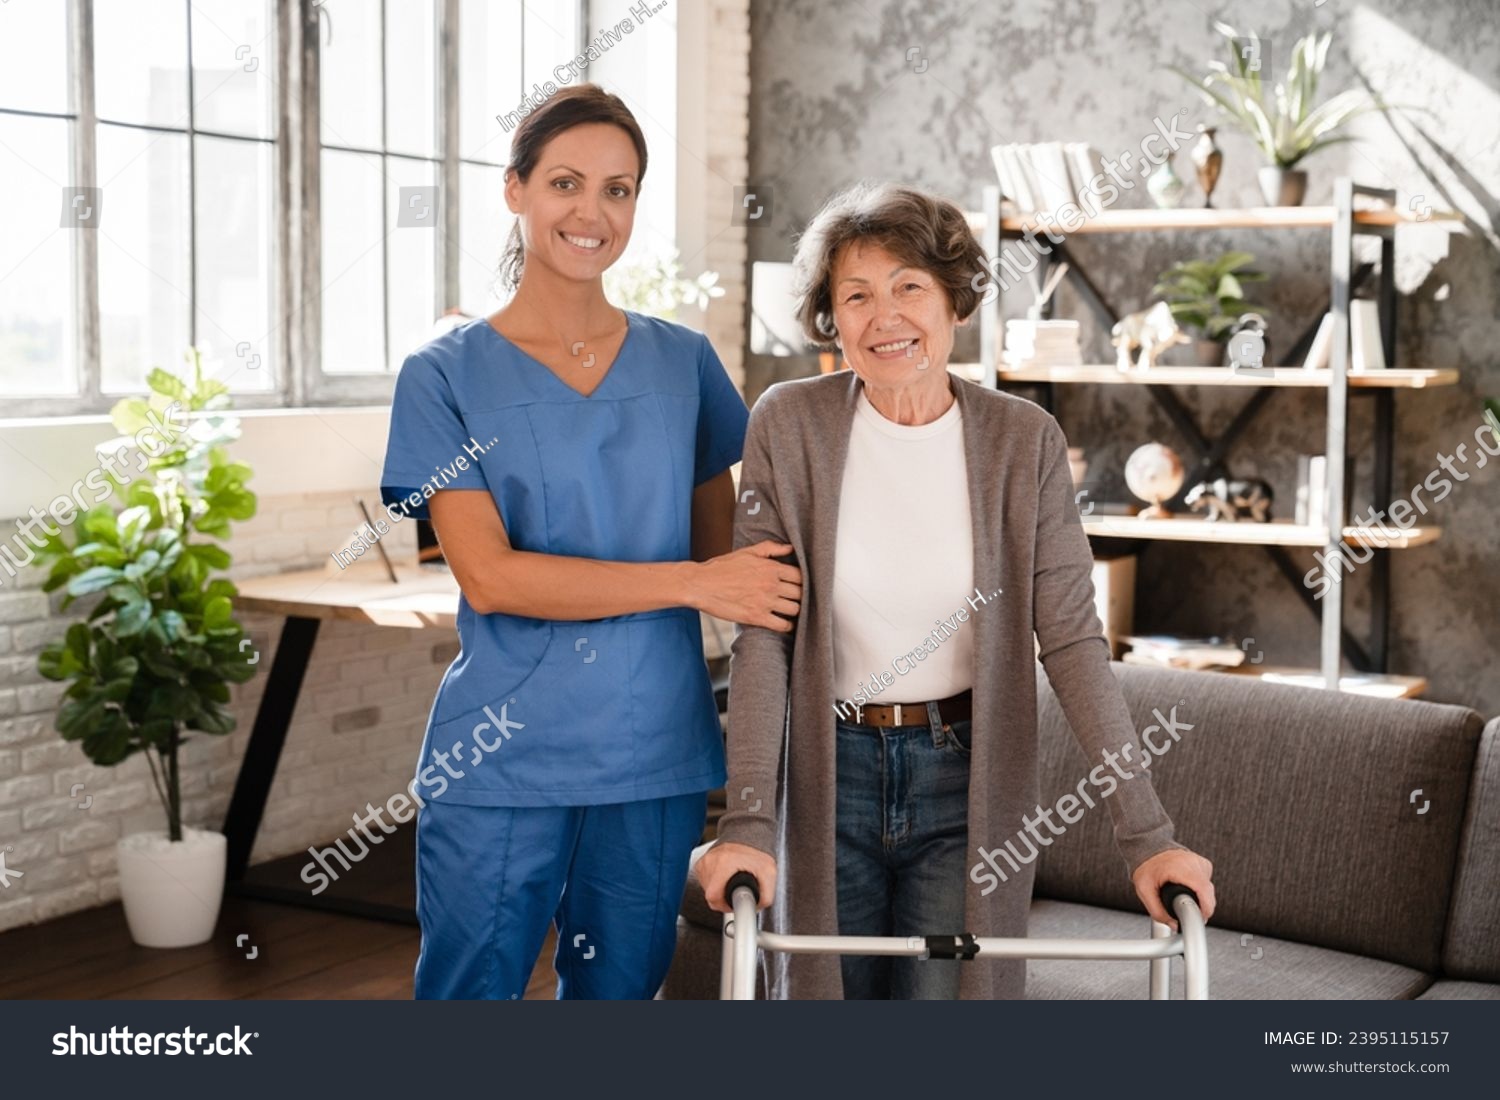 Portrait pf happy smiling caretaker medicine worker nurse helping elderly senior old patient with walking frame. Rehabilitation after trauma injury #2395115157